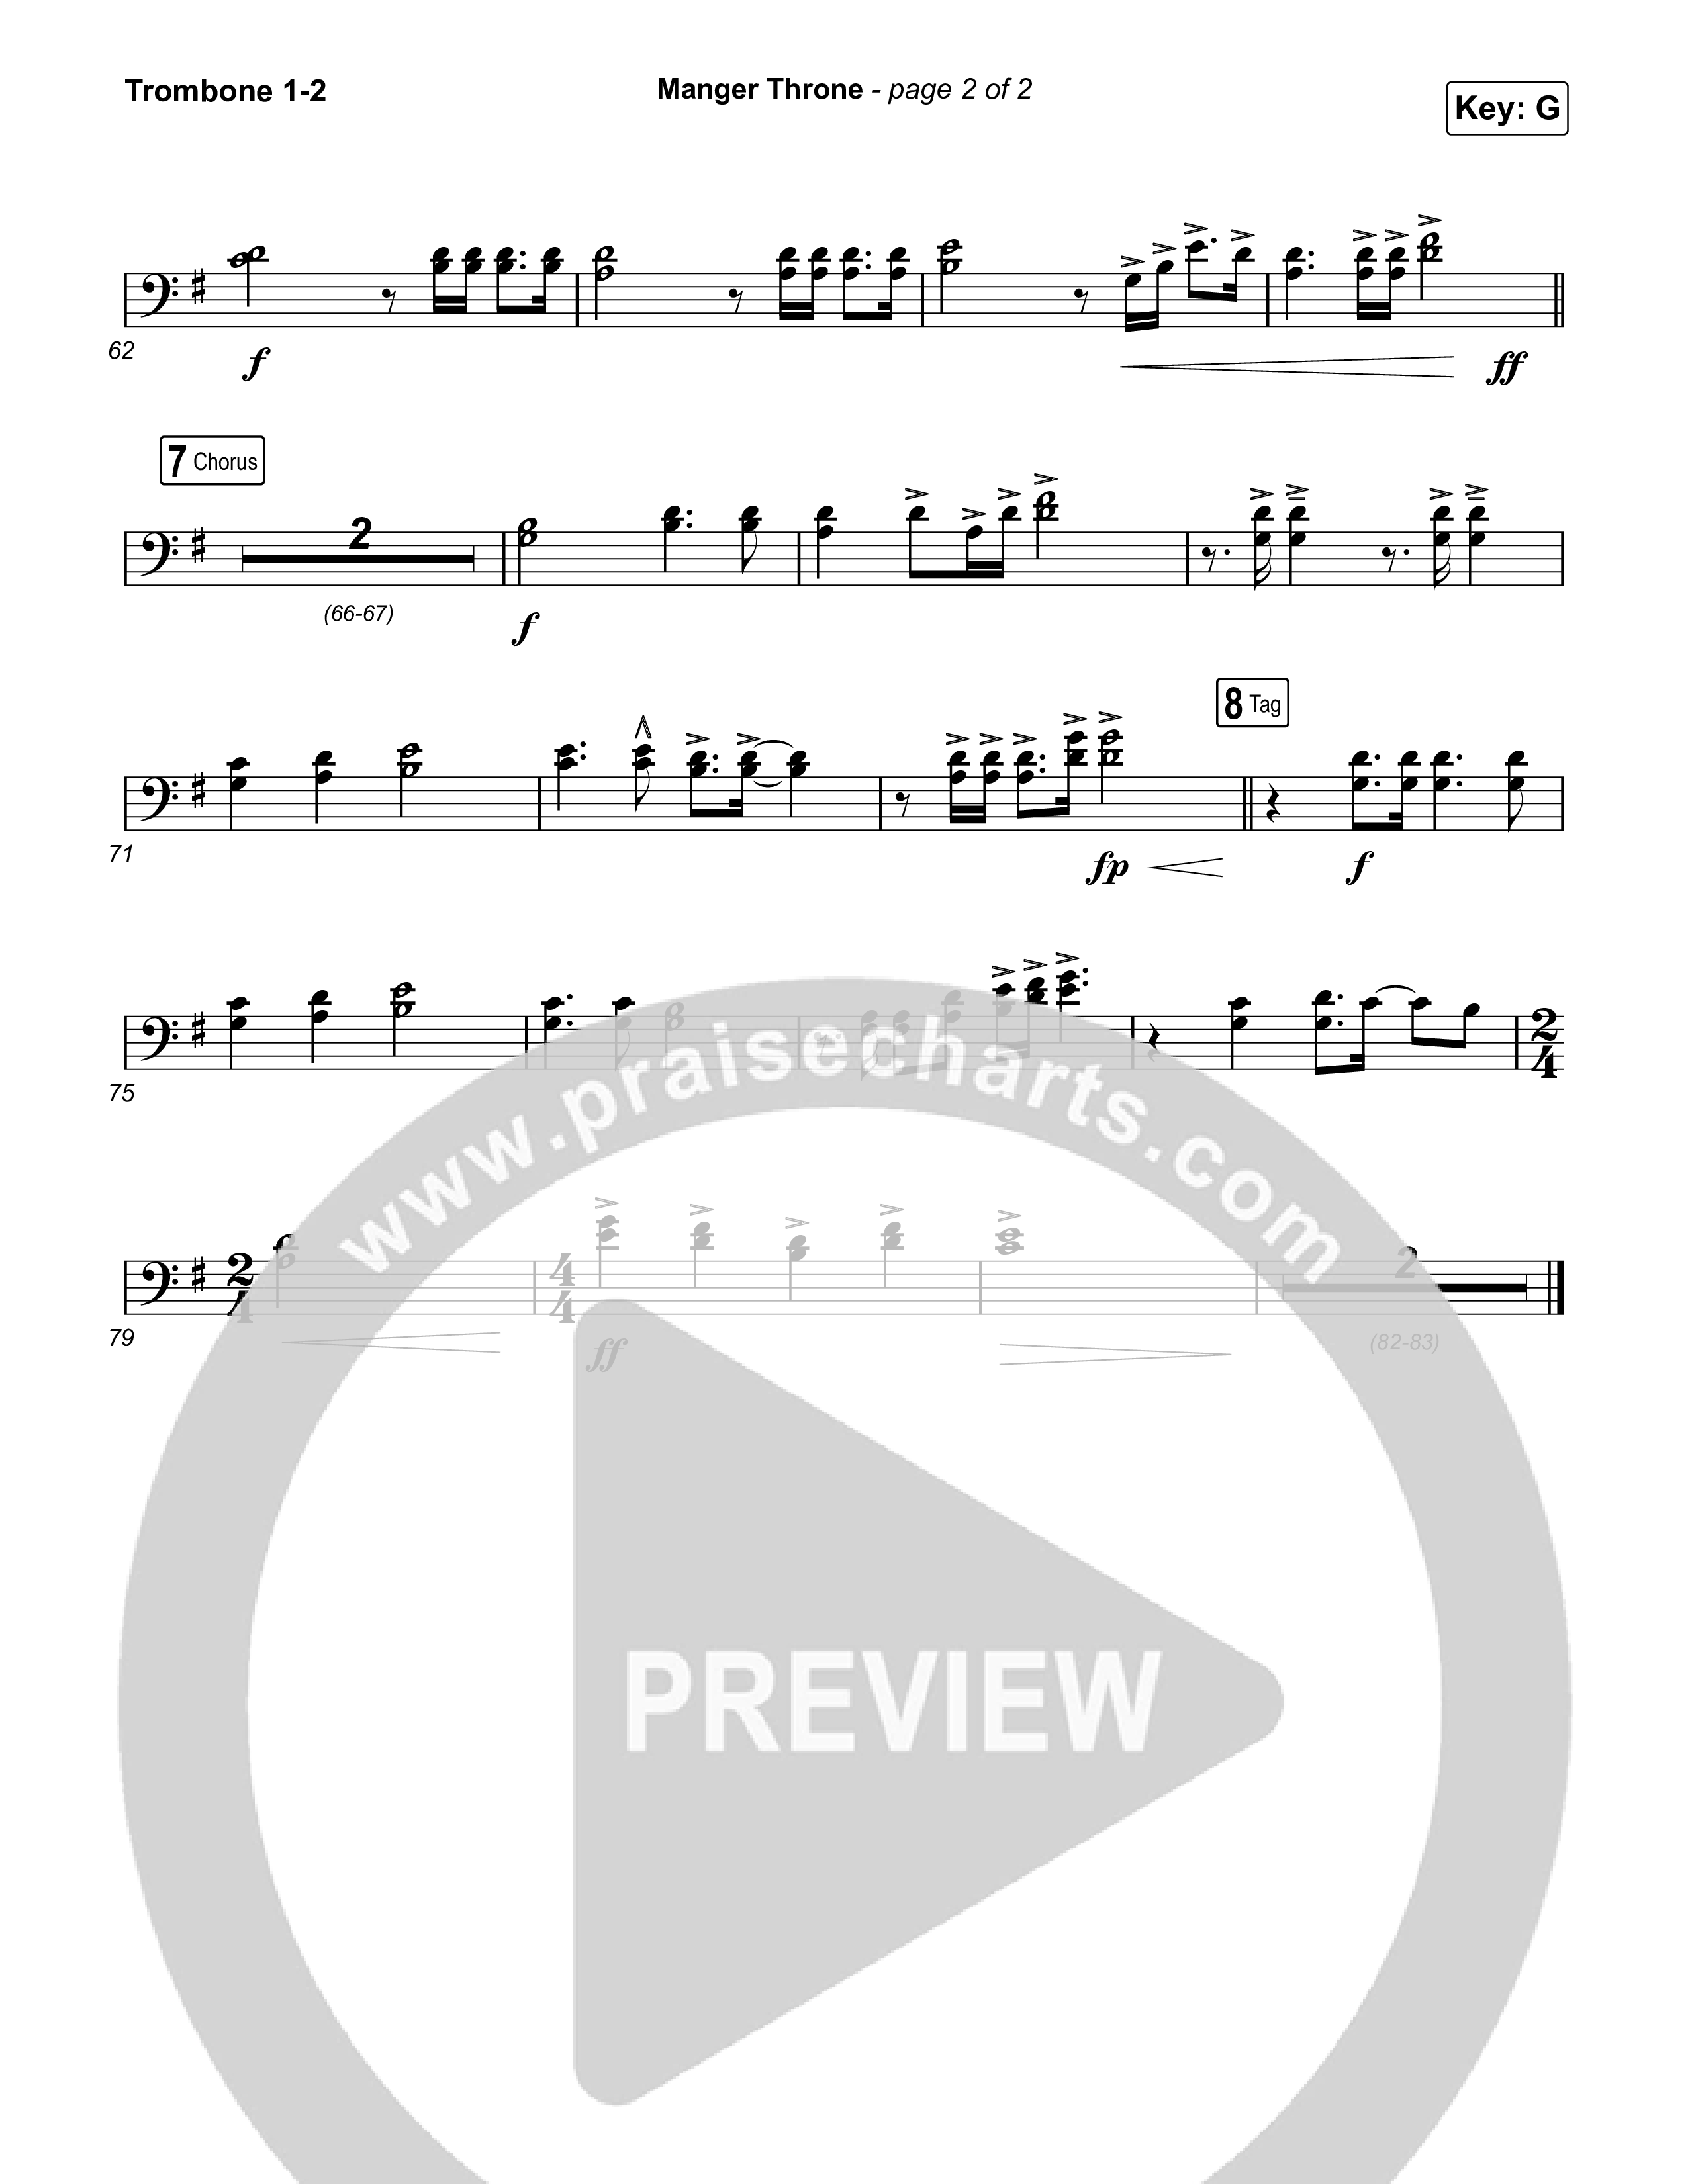 Manger Throne (Choral Anthem SATB) Trombone 1/2 (Phil Wickham / Arr. Erik Foster)